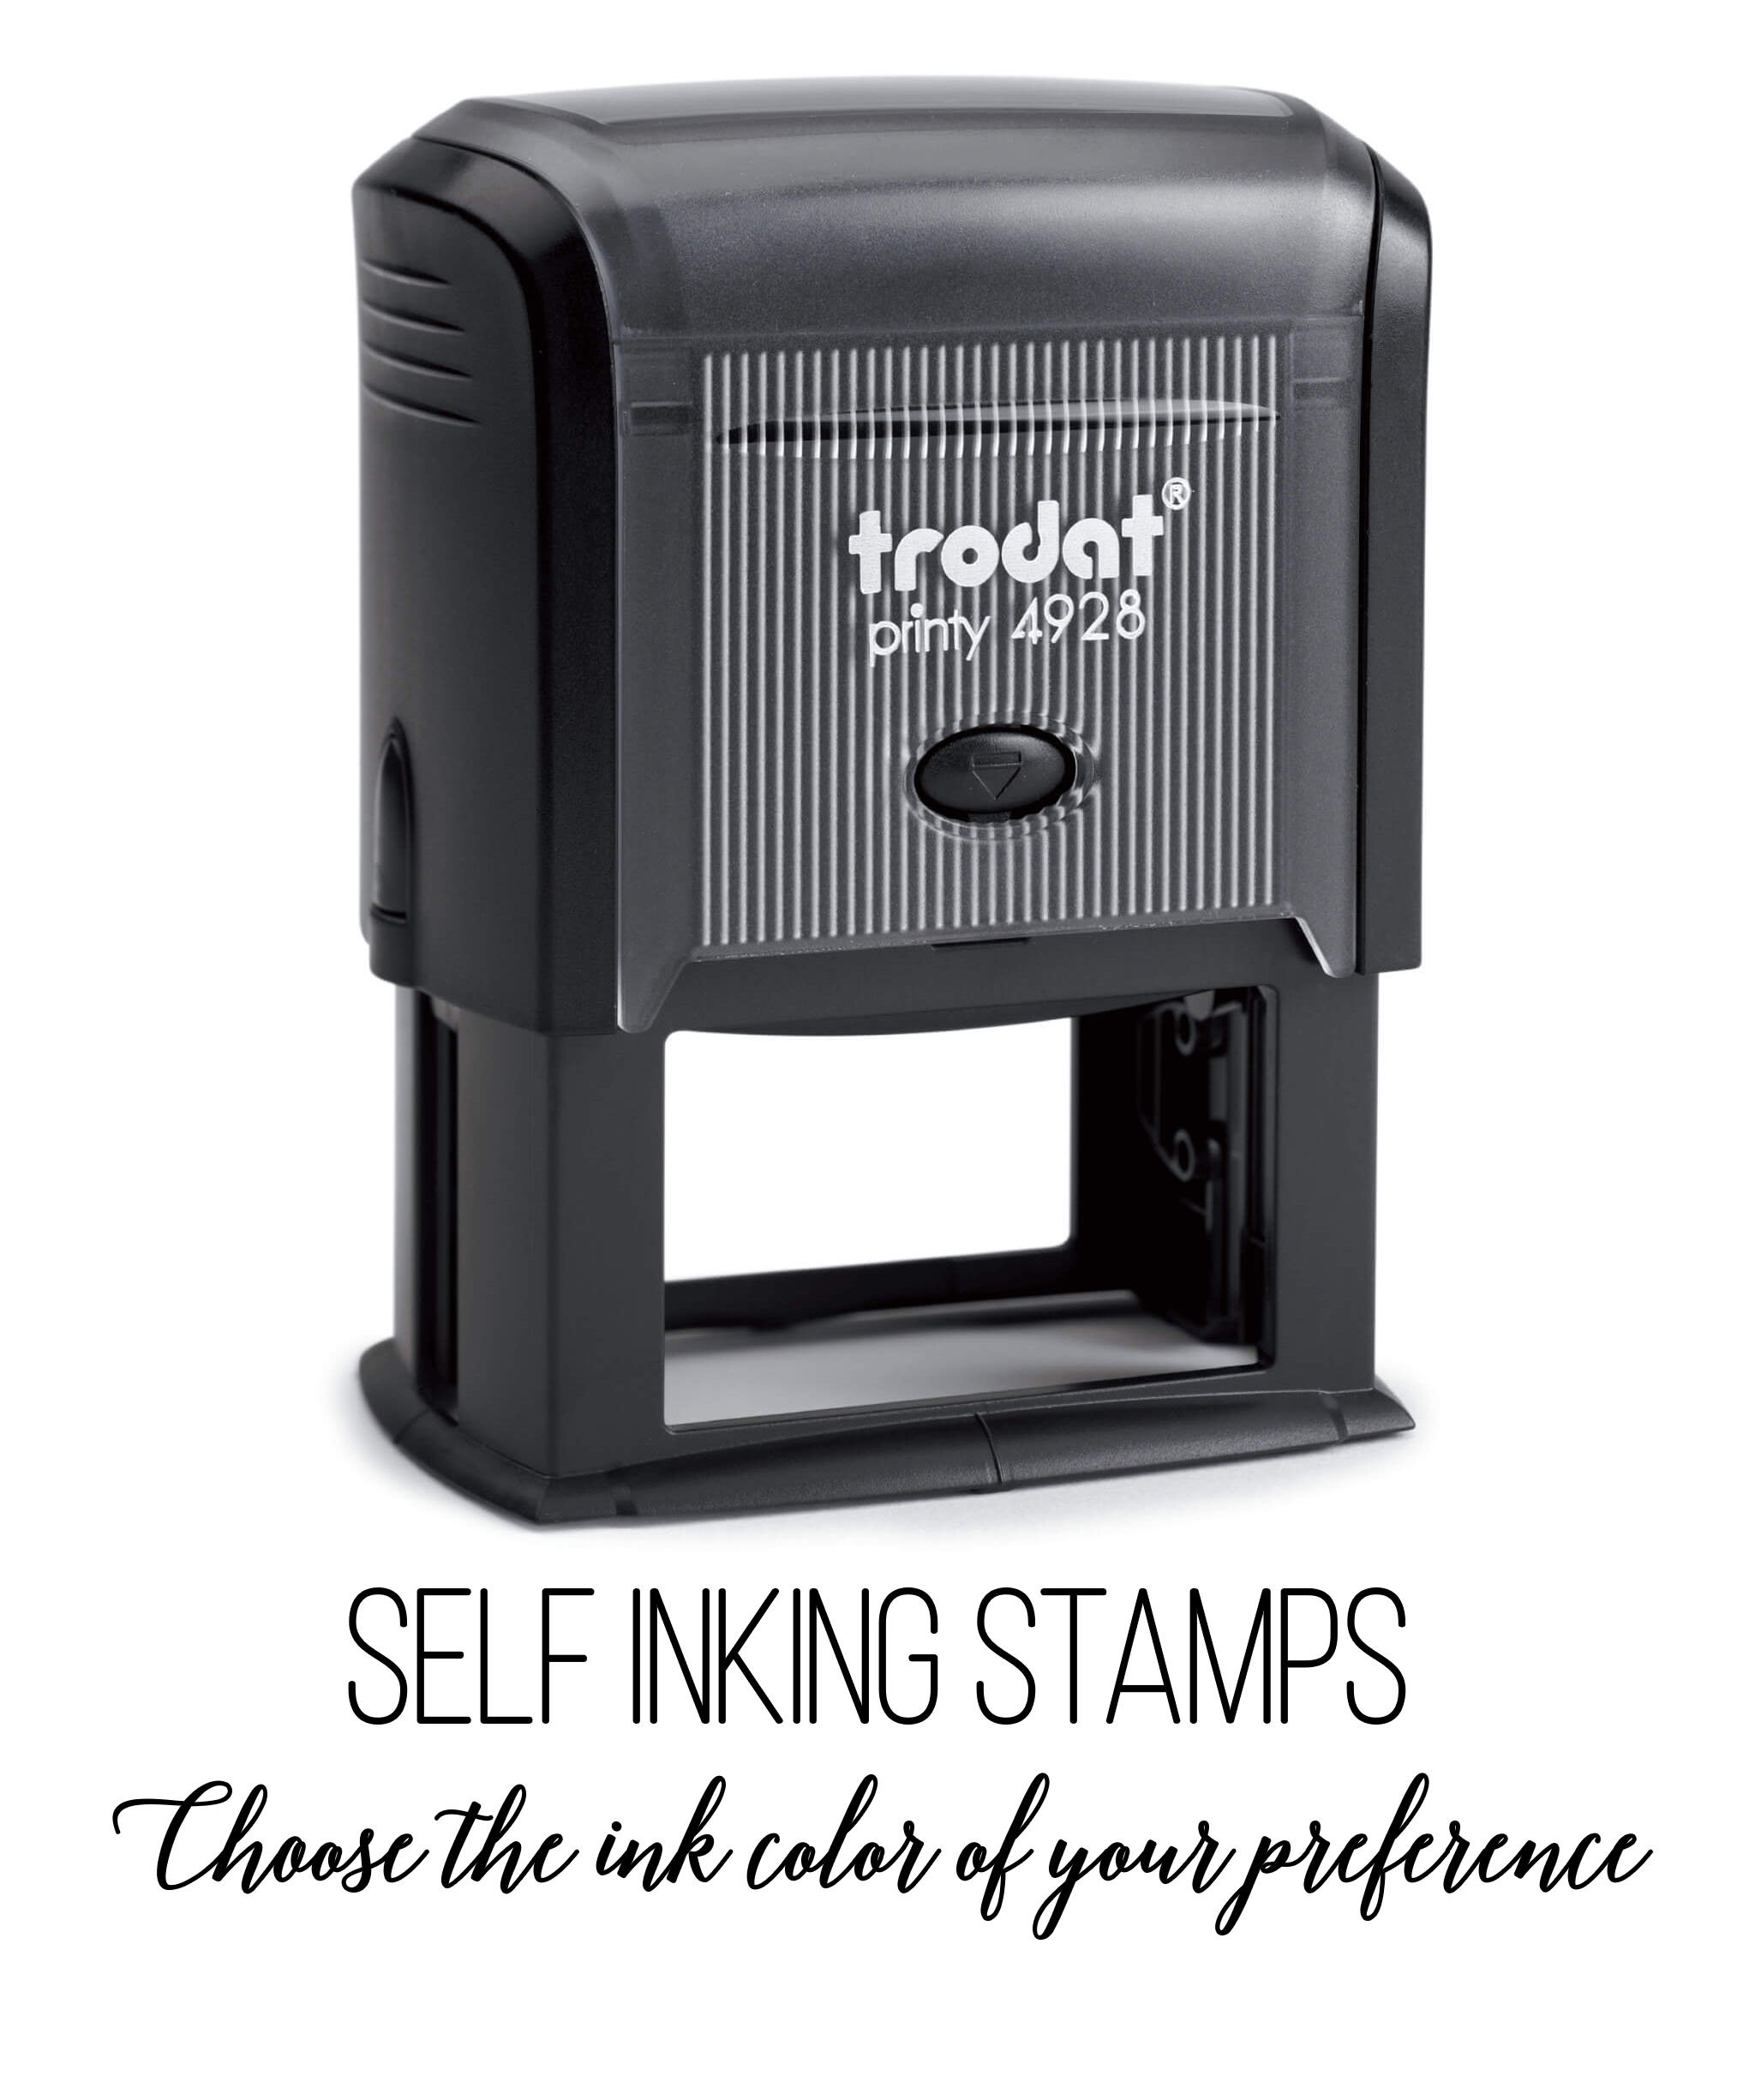 Personalized Return Address Stamp, Custom Return Address Stamp, The B –  Stamp Out